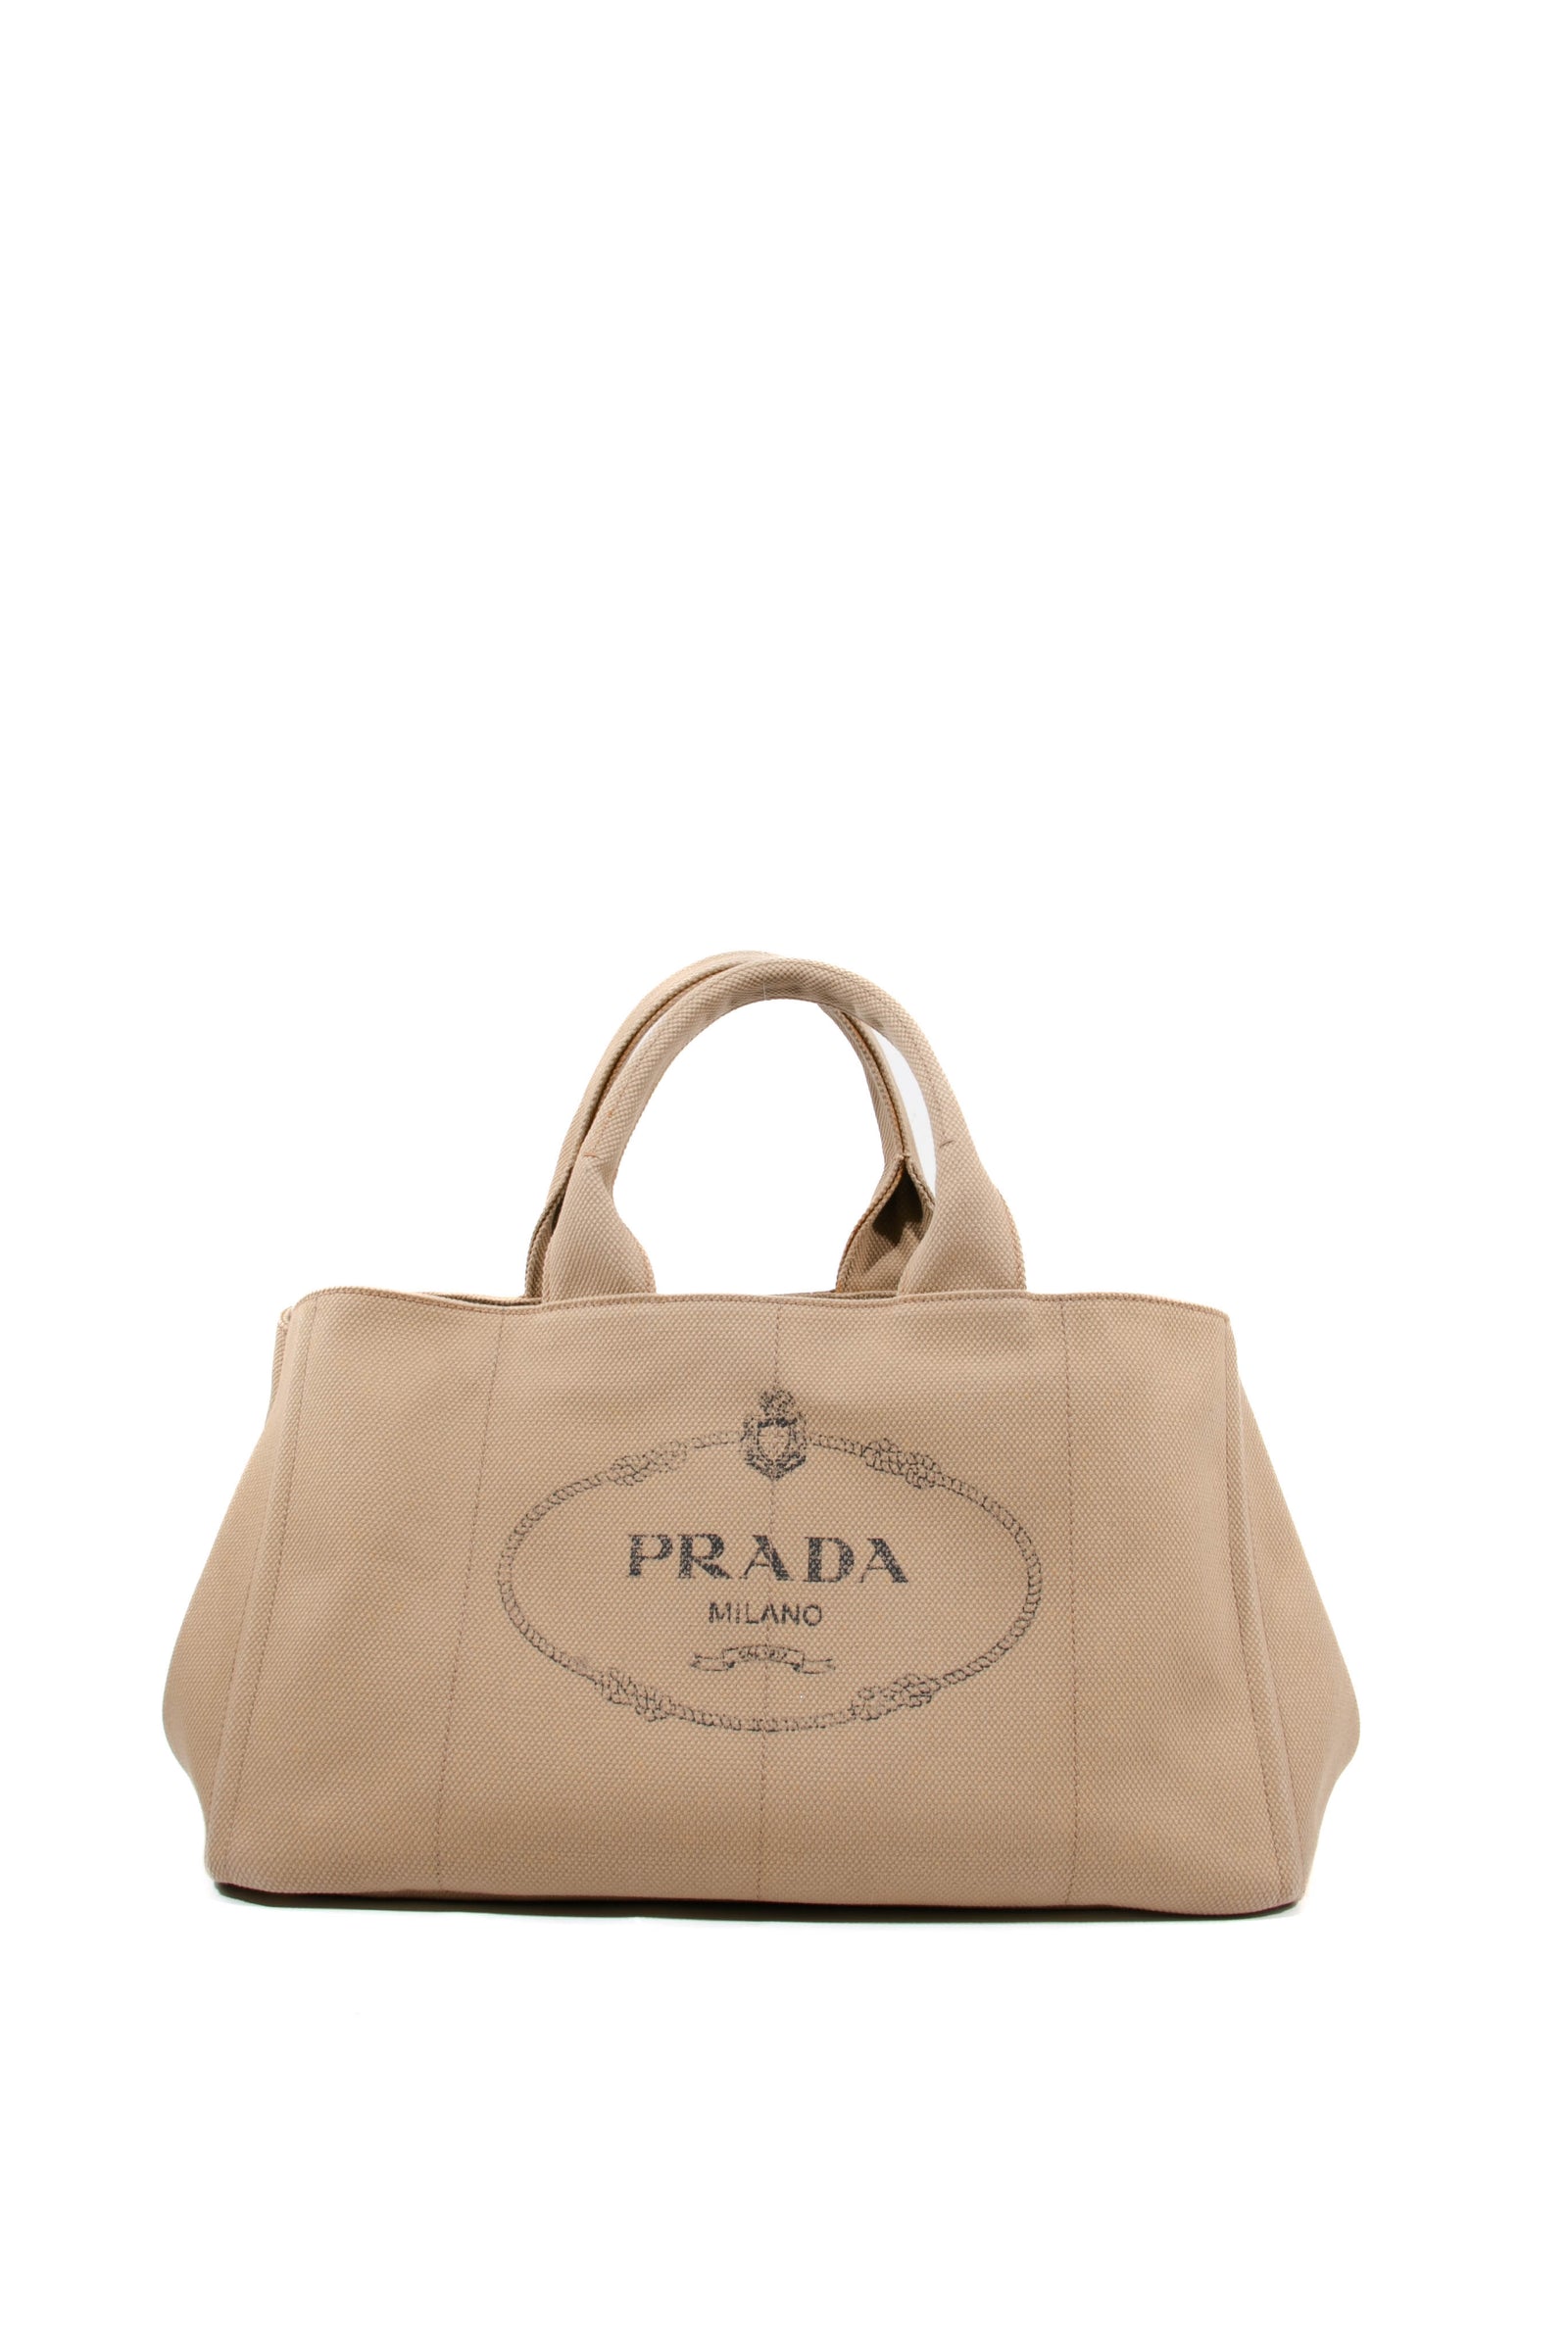 Prada panther rock bag collector edition limited 2018 - Katheley's